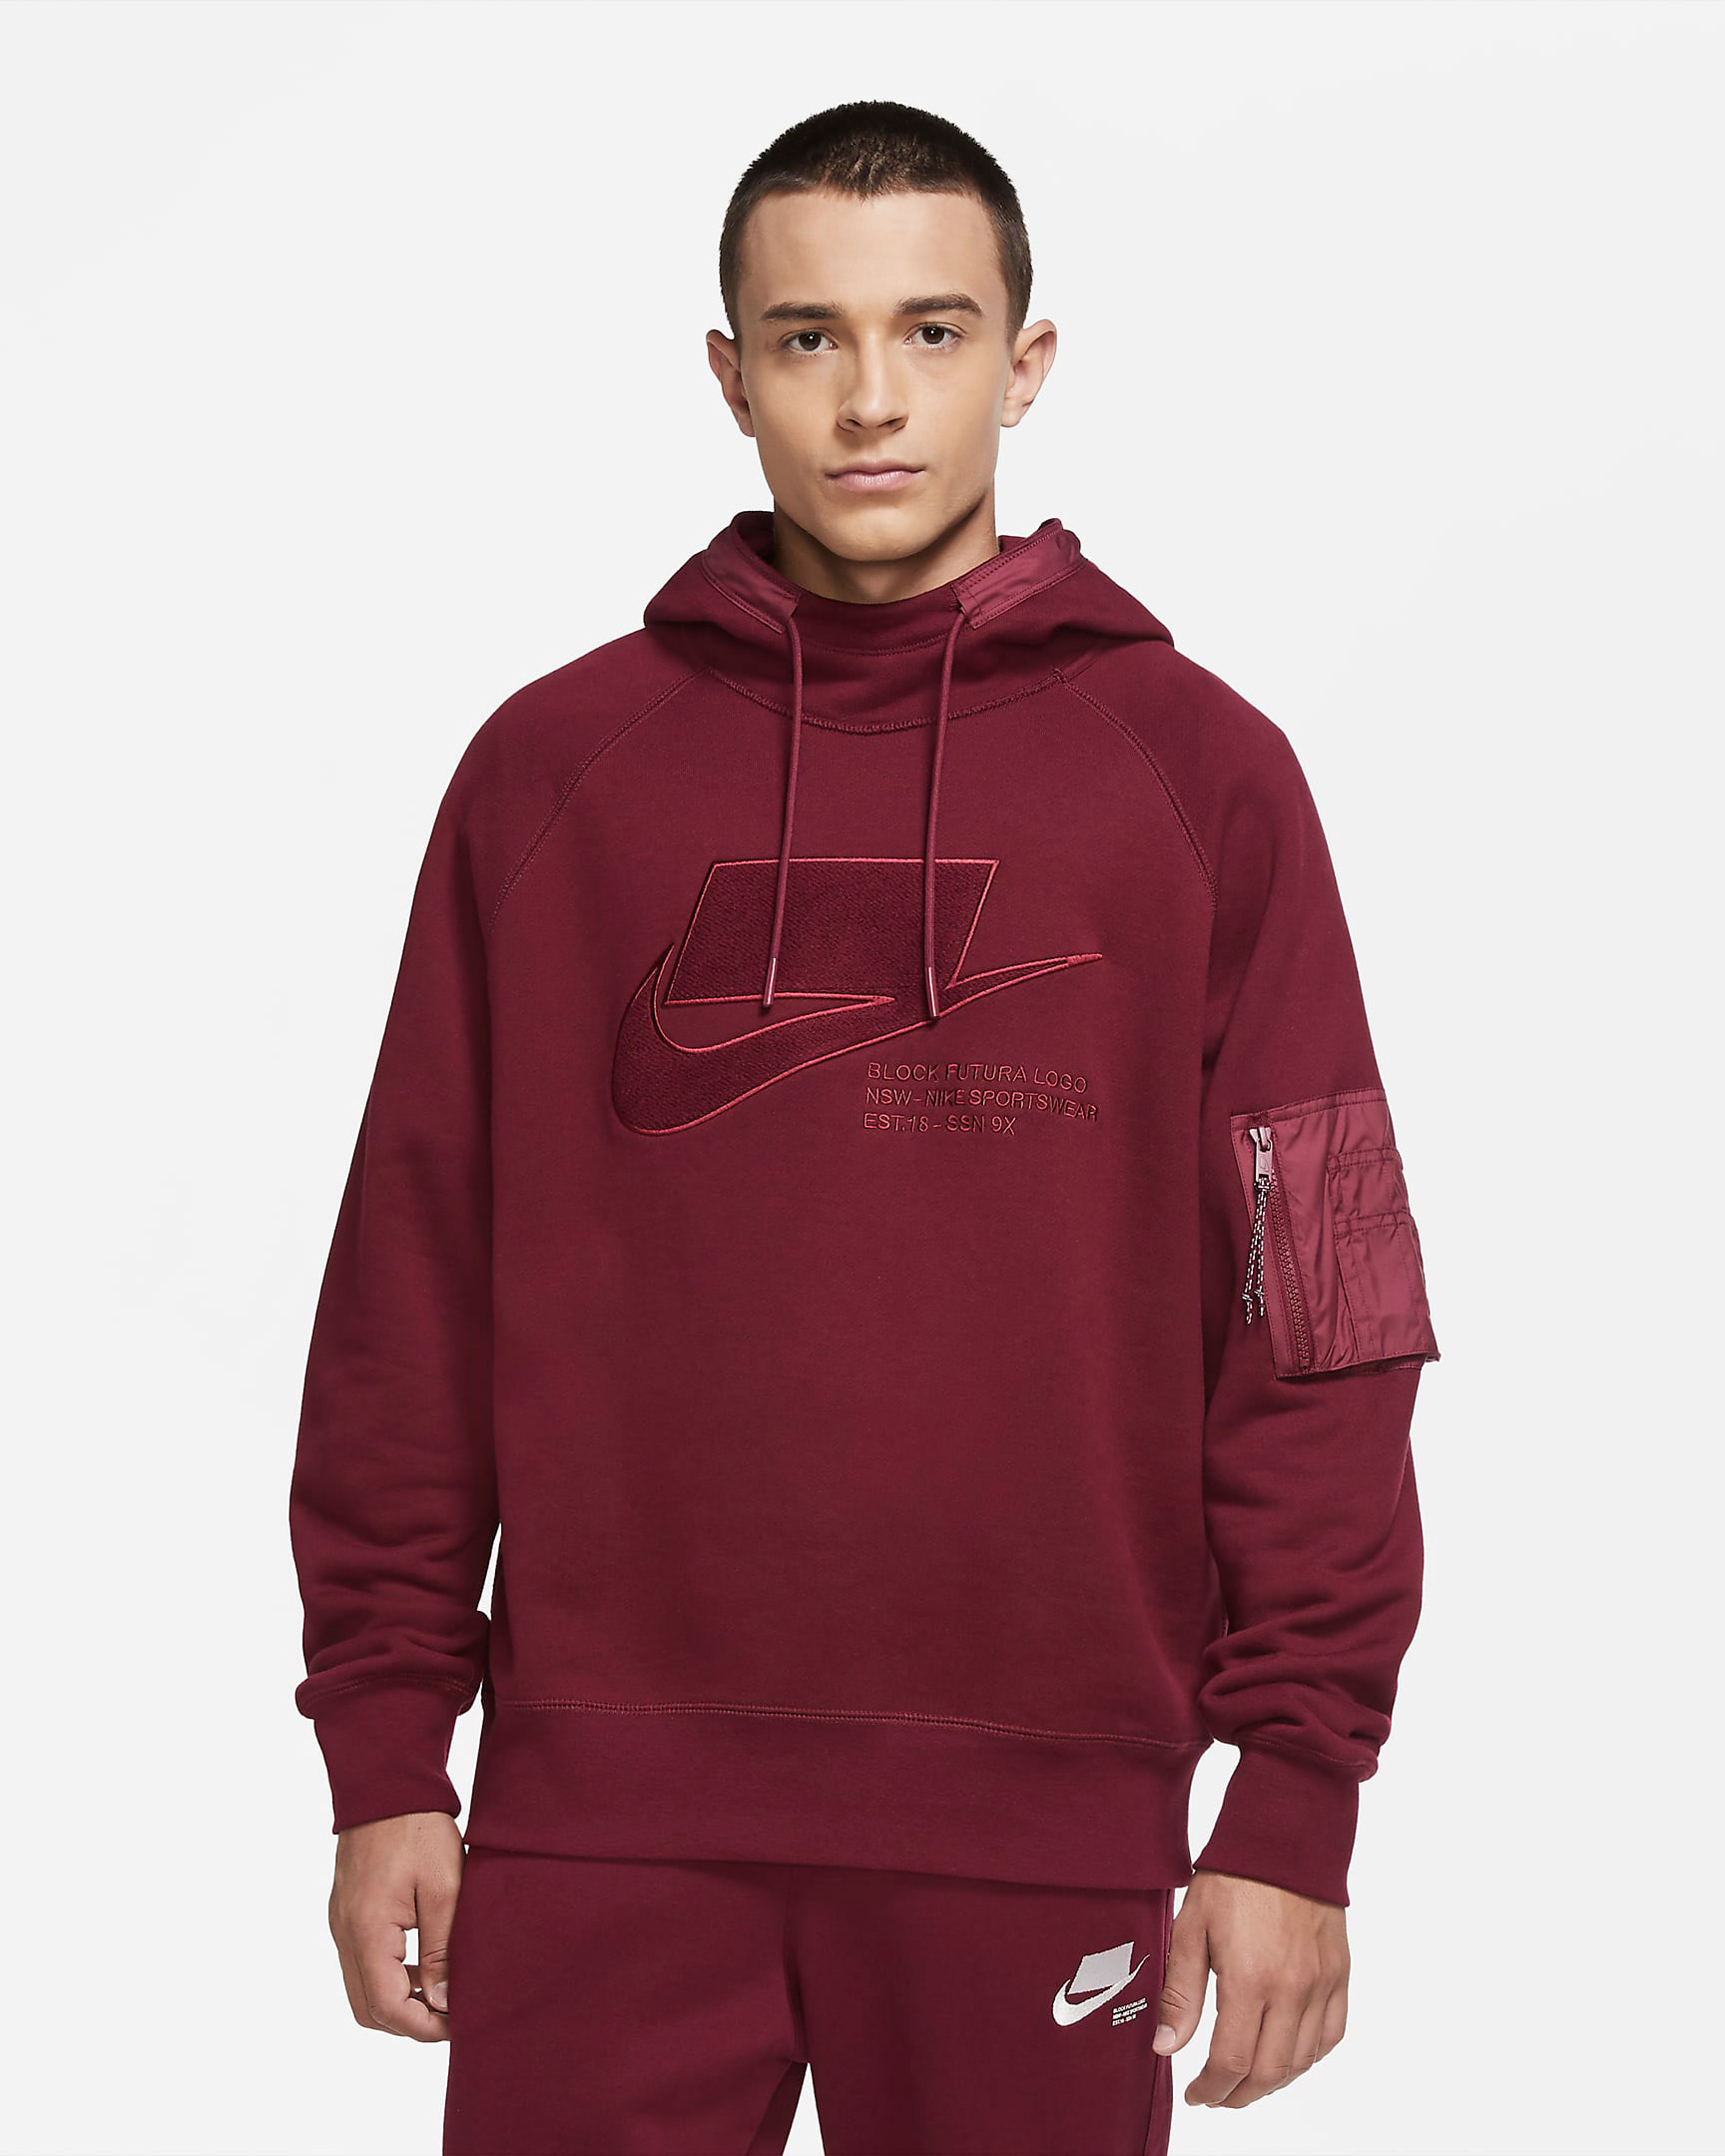 nike-sportswear-hoodie-beetroot-bordeaux